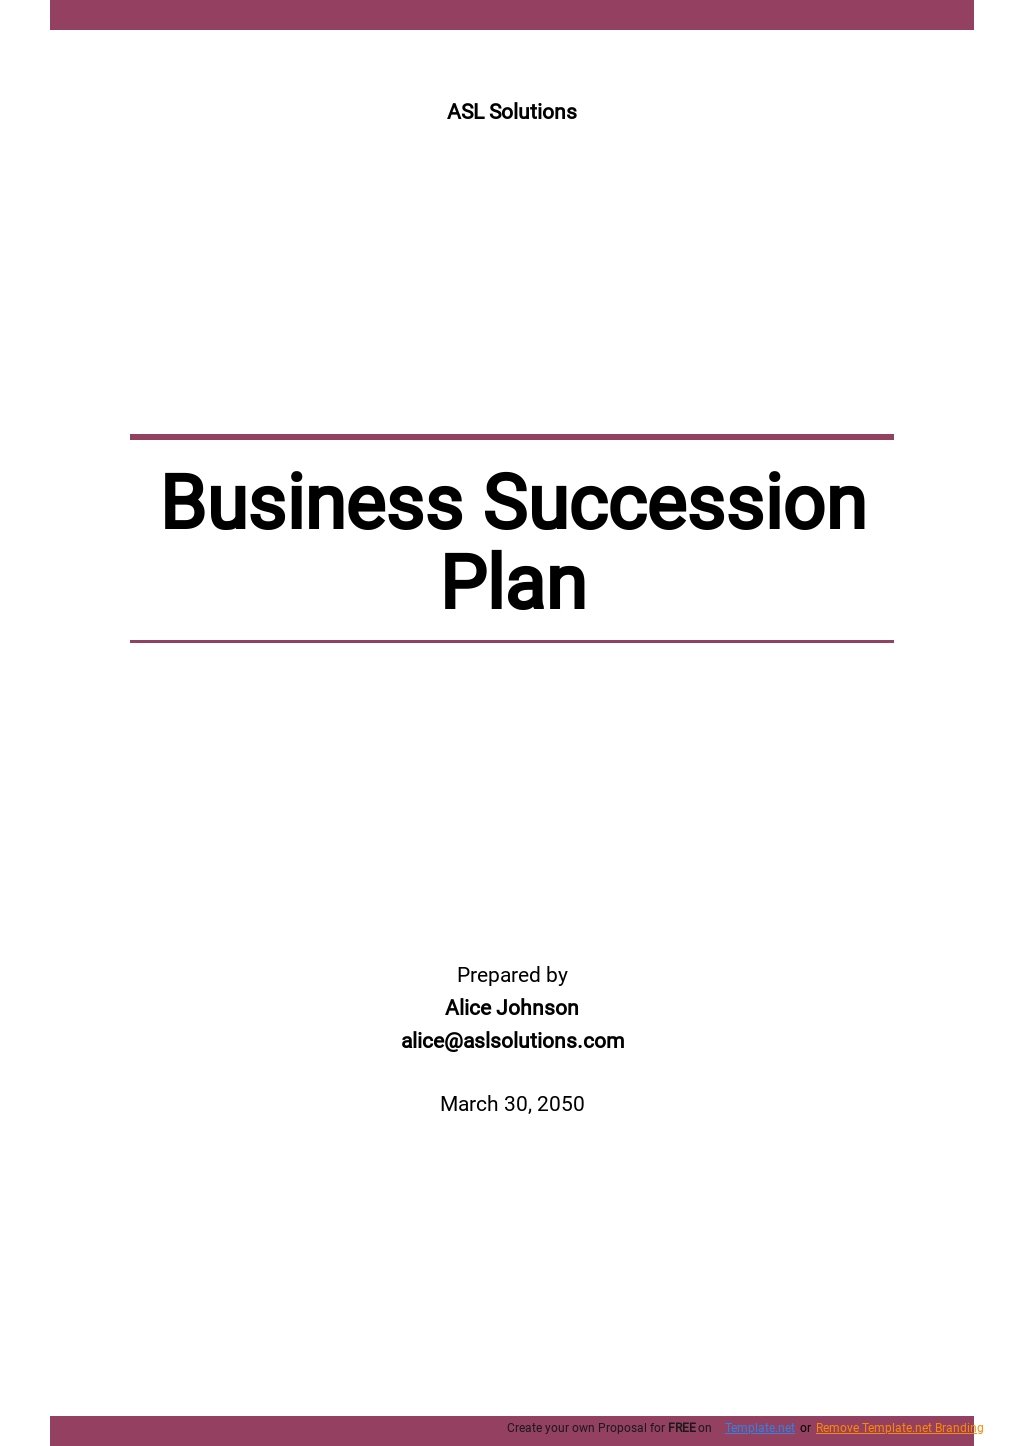 Business Succession Plan Template